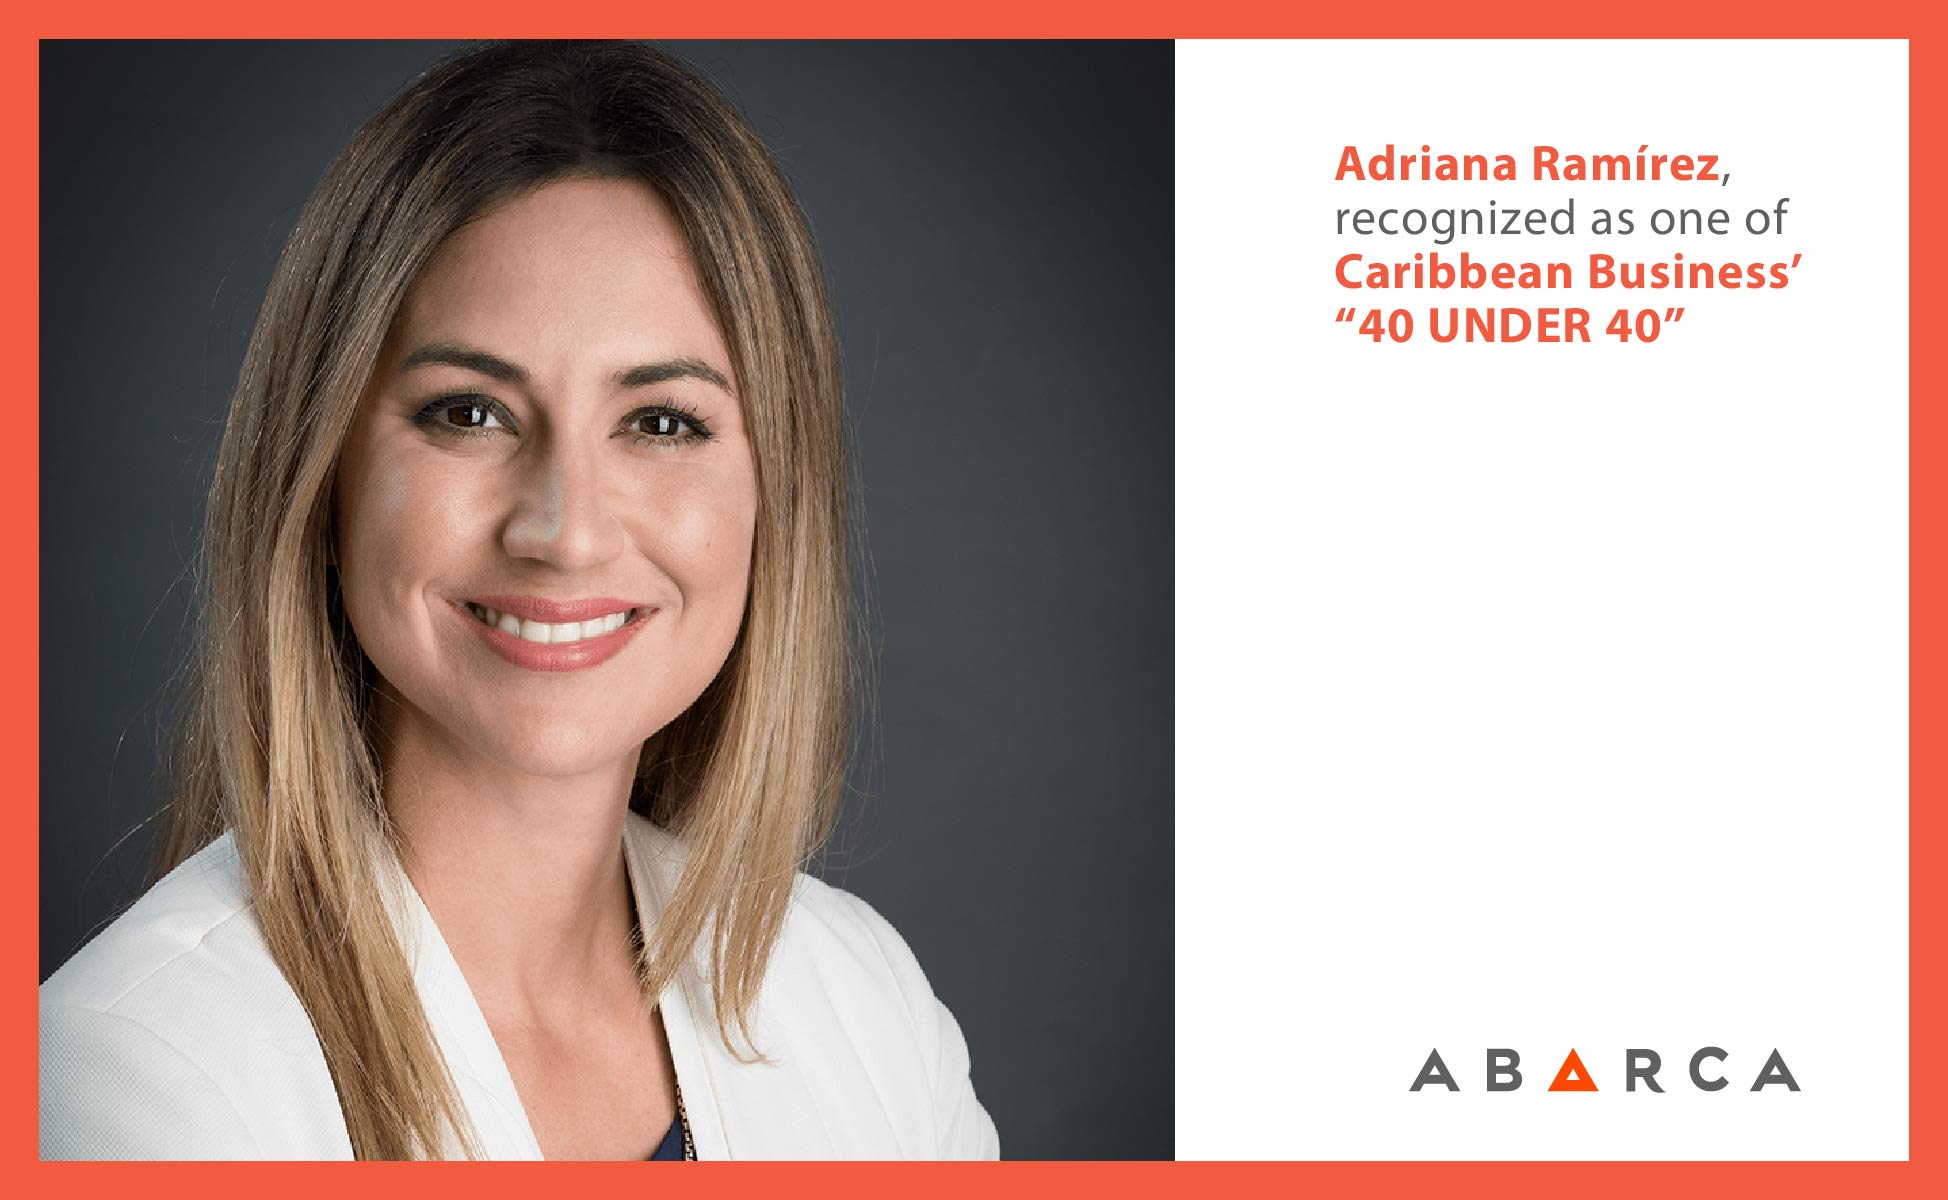 Abarca Health: Adriana Ramírez, Esq. is one of Caribbean Business’ “40 under 40”